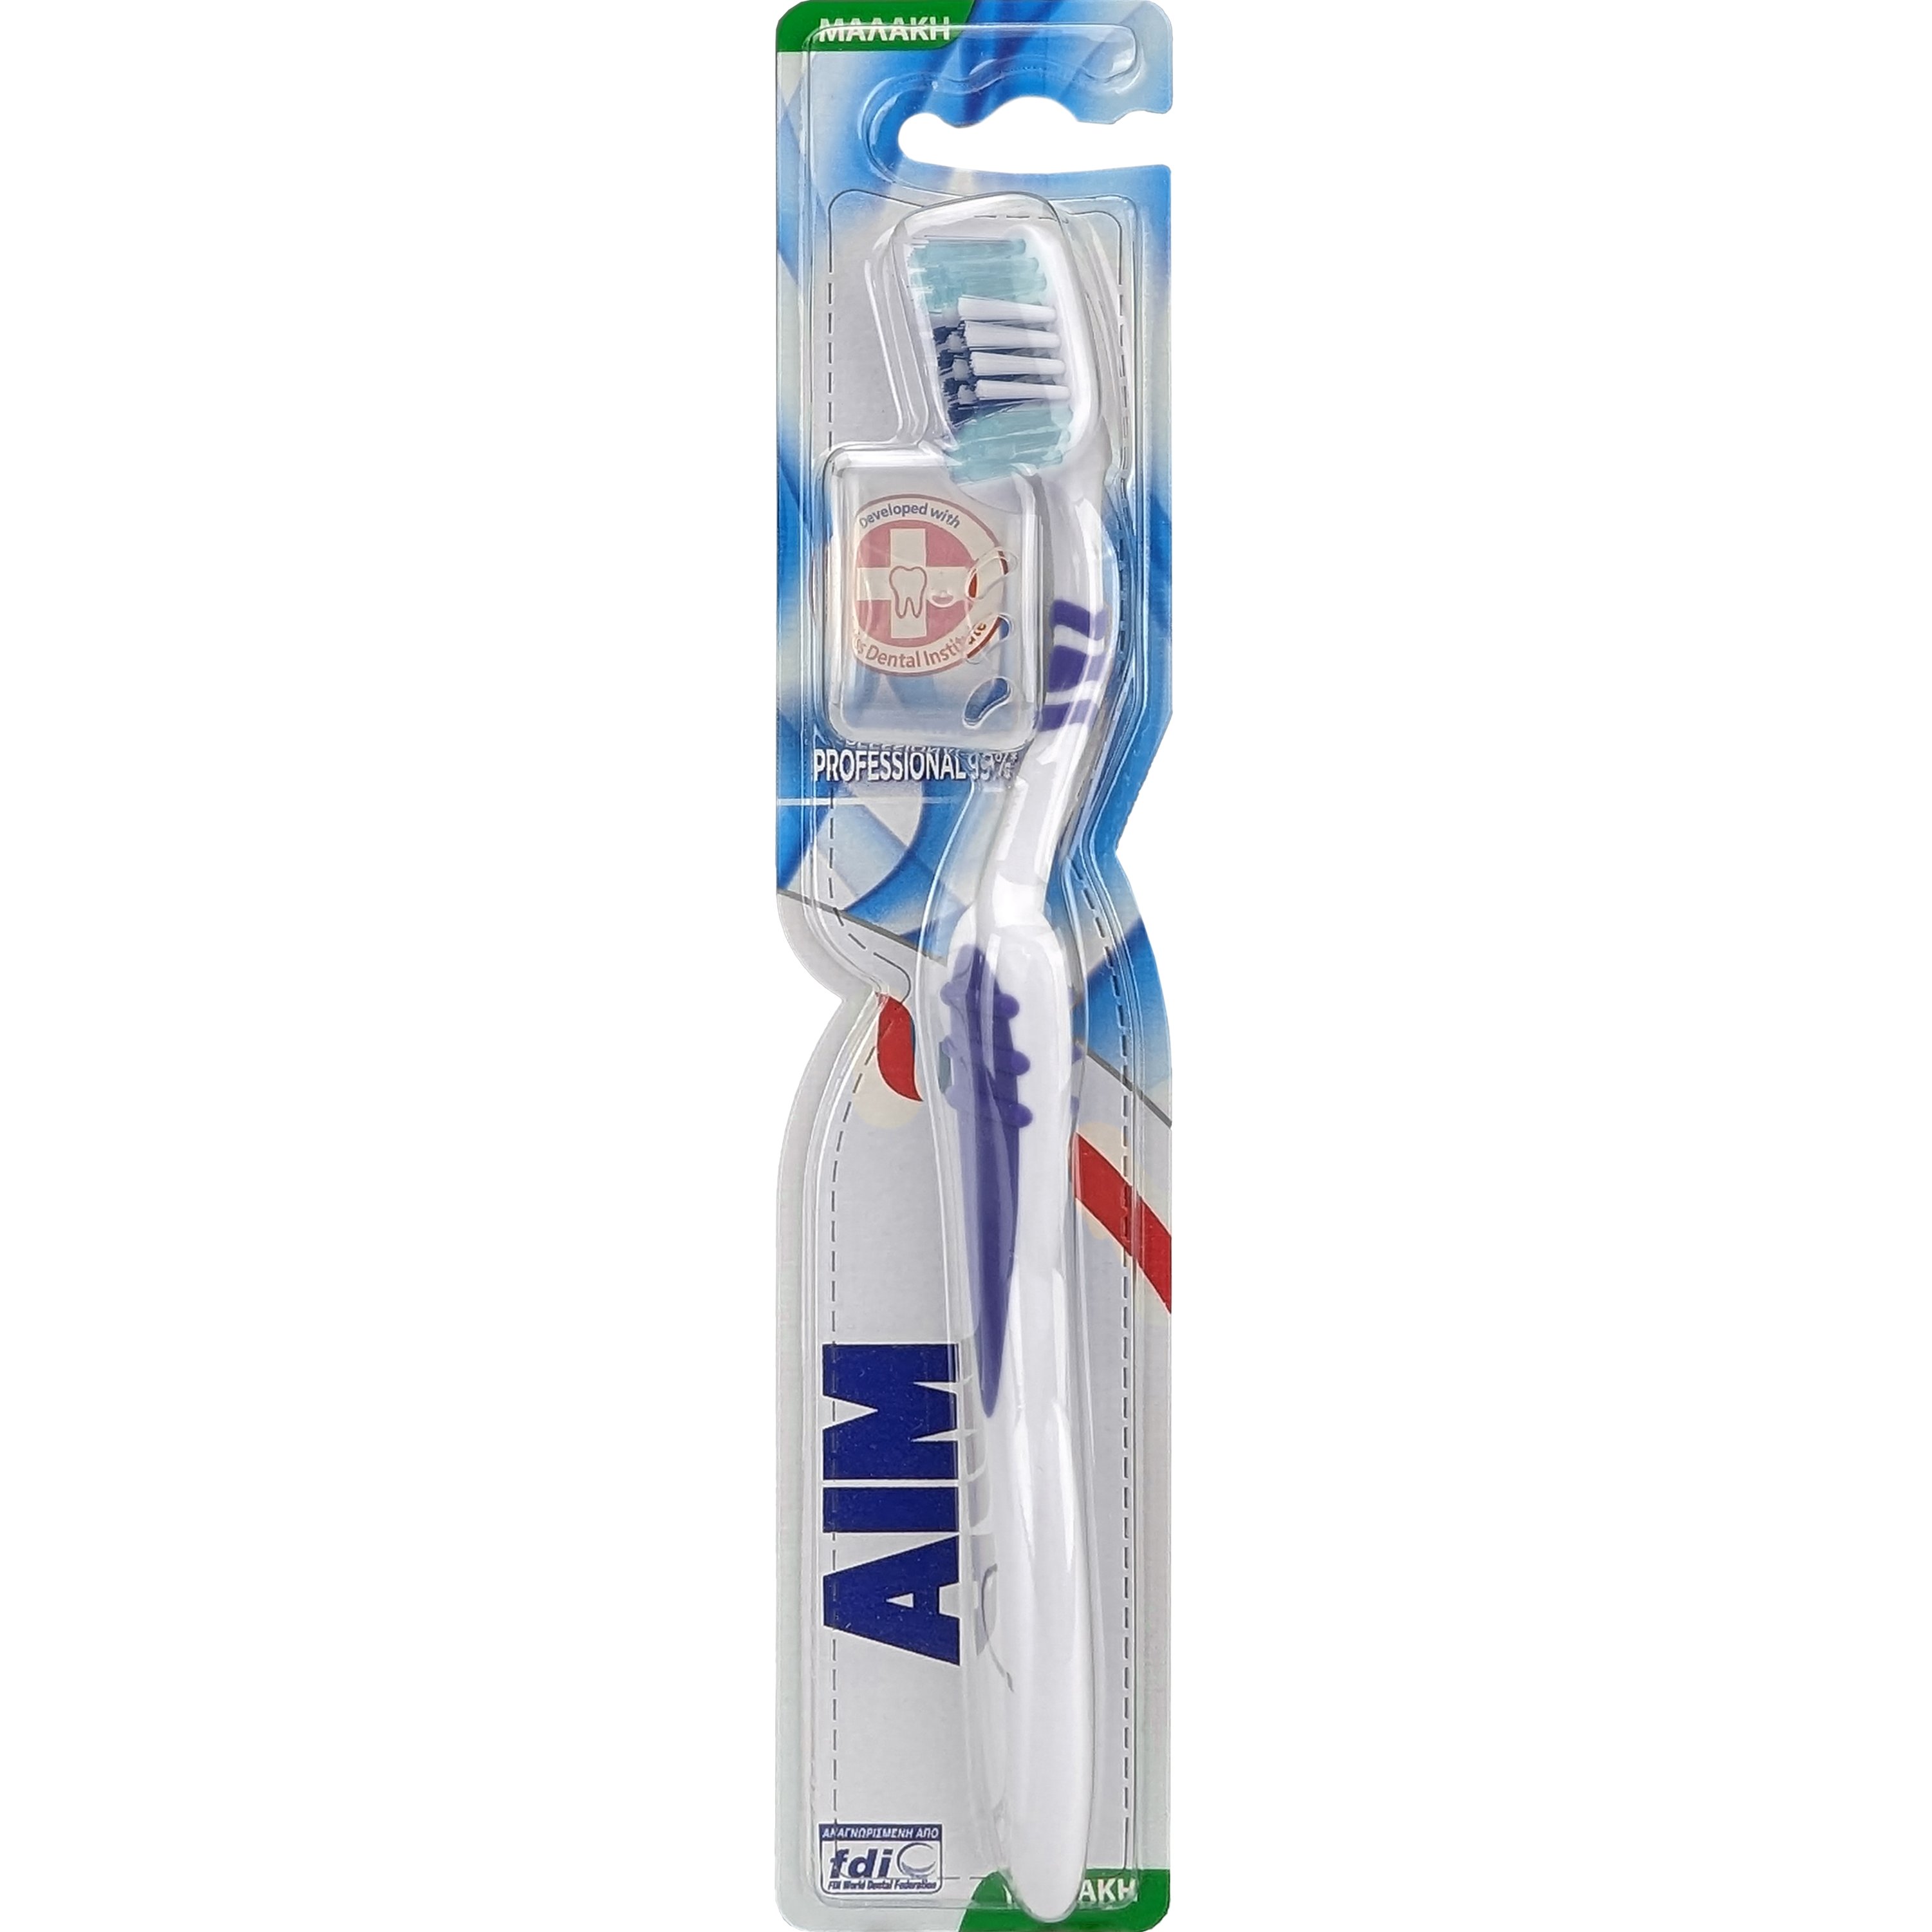 Aim Professional 99% Soft Toothbrush Μπλε Σκούρο Χειροκίνητη Οδοντόβουρτσα με Μαλακές Ίνες για Έως 99% Απομάκρυνση Υπολειμμάτων 1 Τεμάχιο